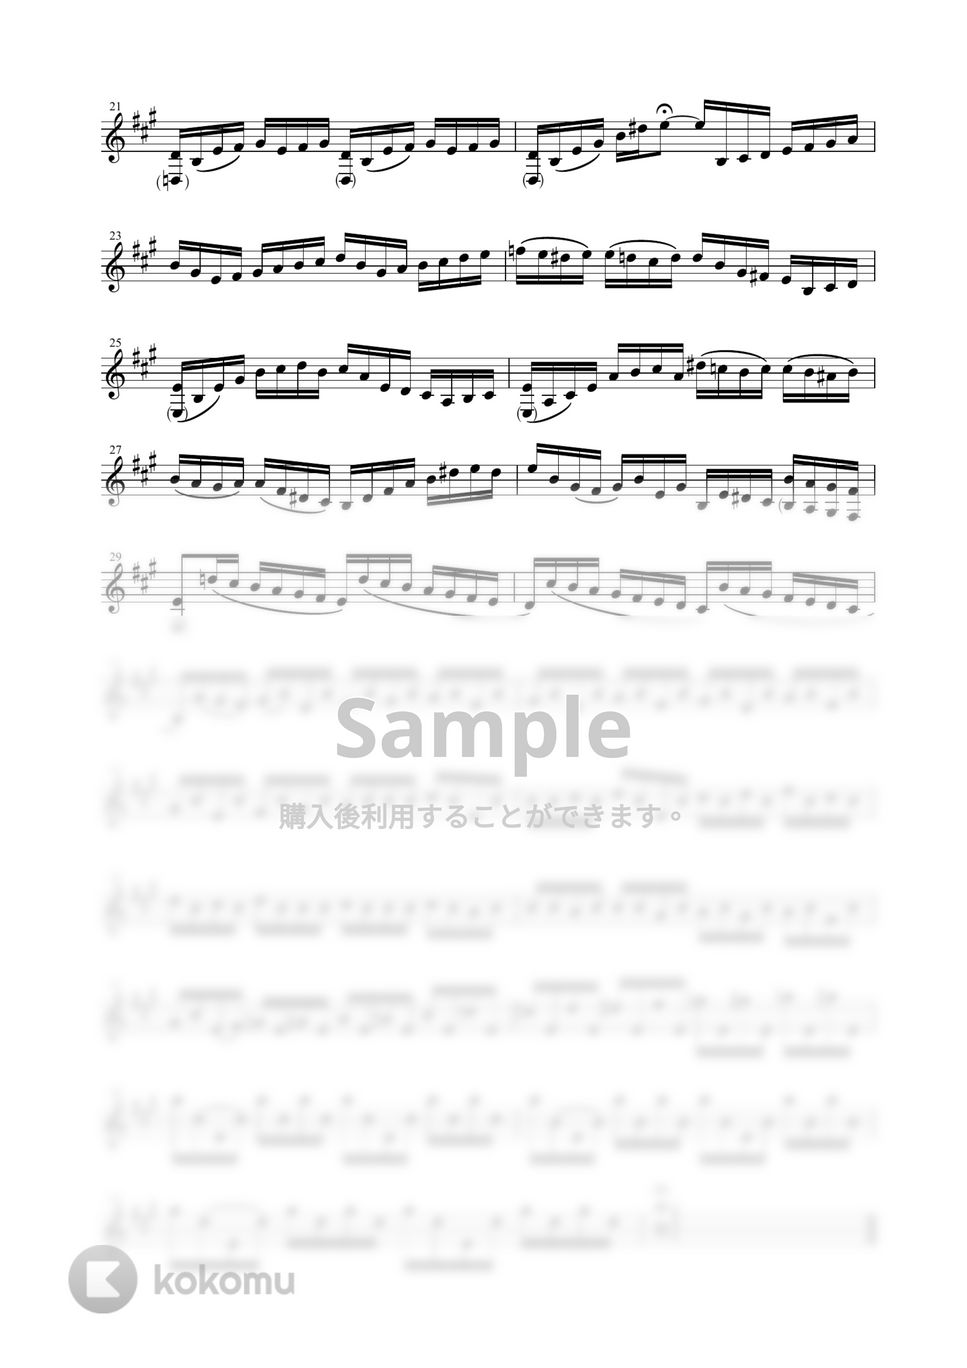 J.S.バッハ - チェロ組曲 より 第１番 プレリュード BWV1007 (トランペット独奏 in Bb / 無伴奏) by Zoe